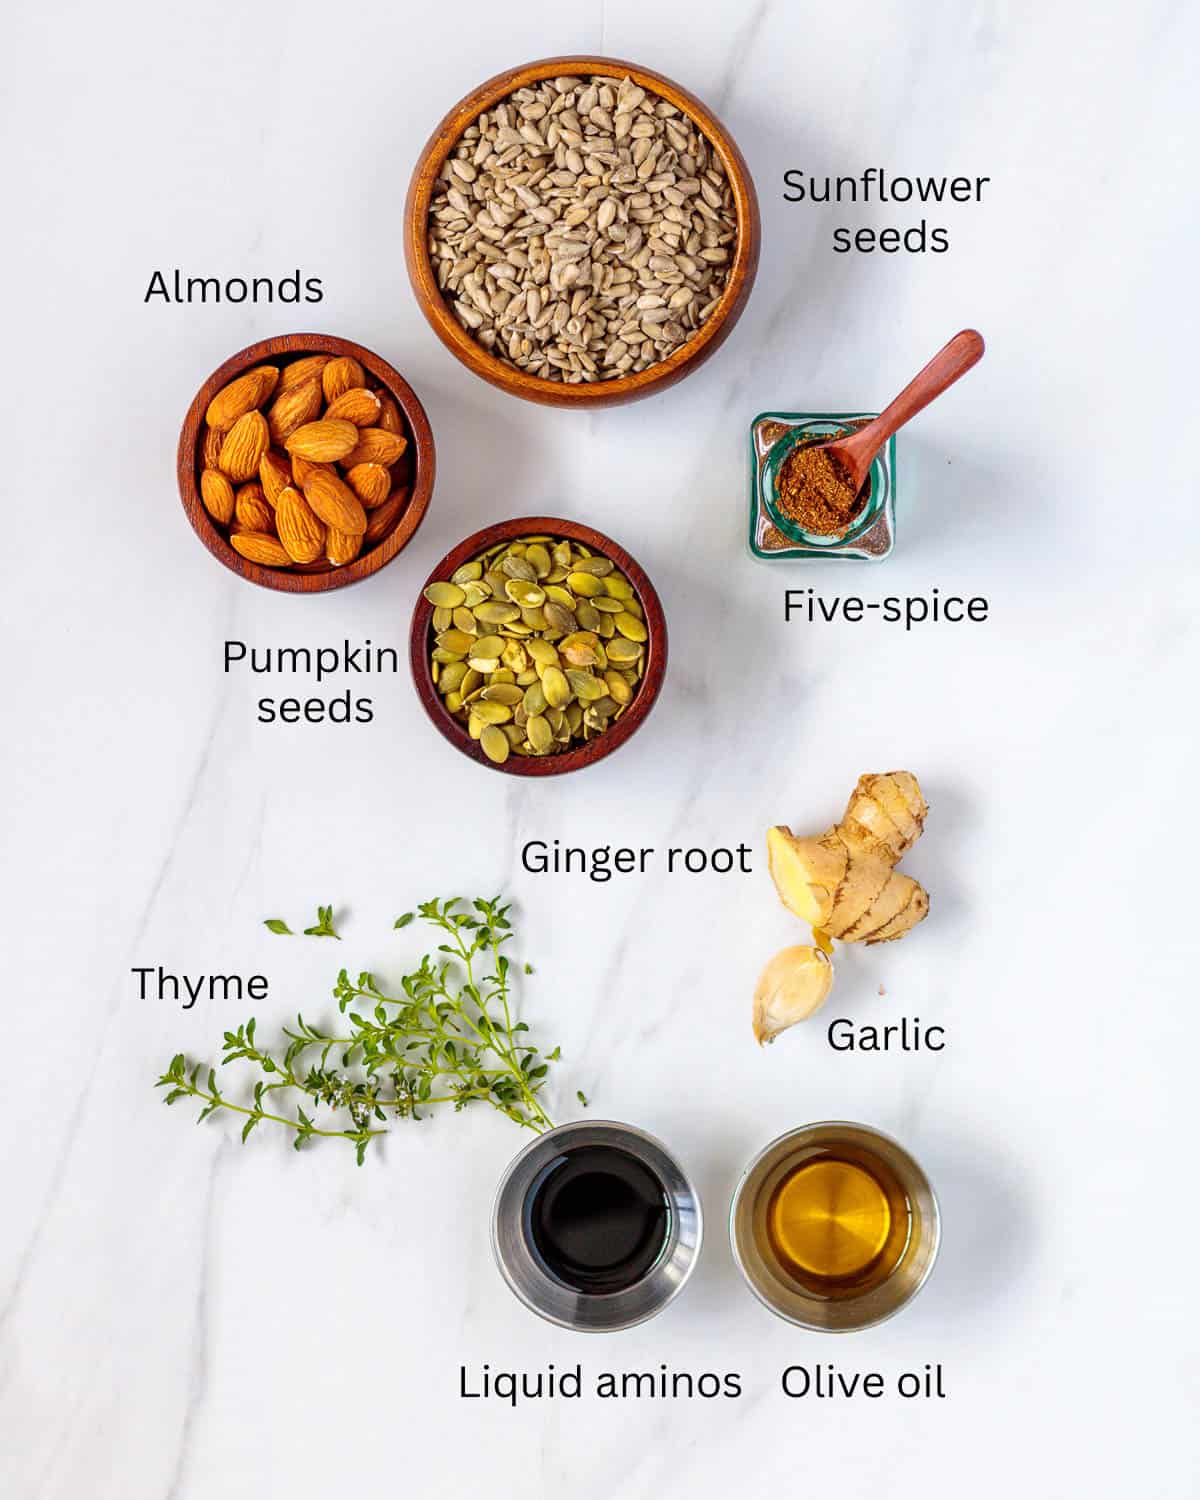 Sunflower seeds, pumpkin seeds, almonds, olive oil and seasonings.